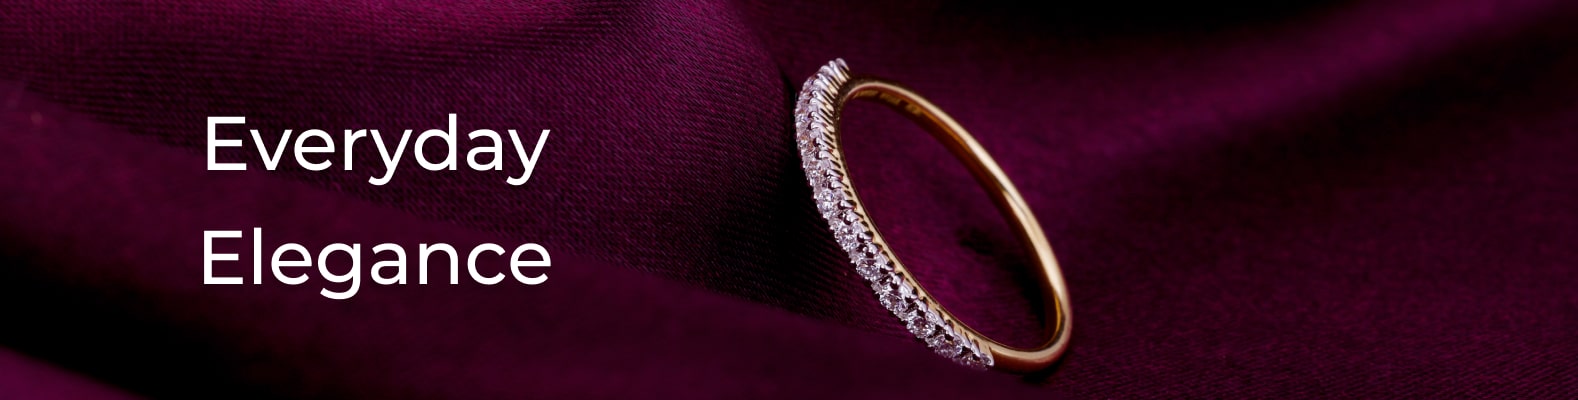 Everyday Elegance - Gold Diamond Everyday Wear